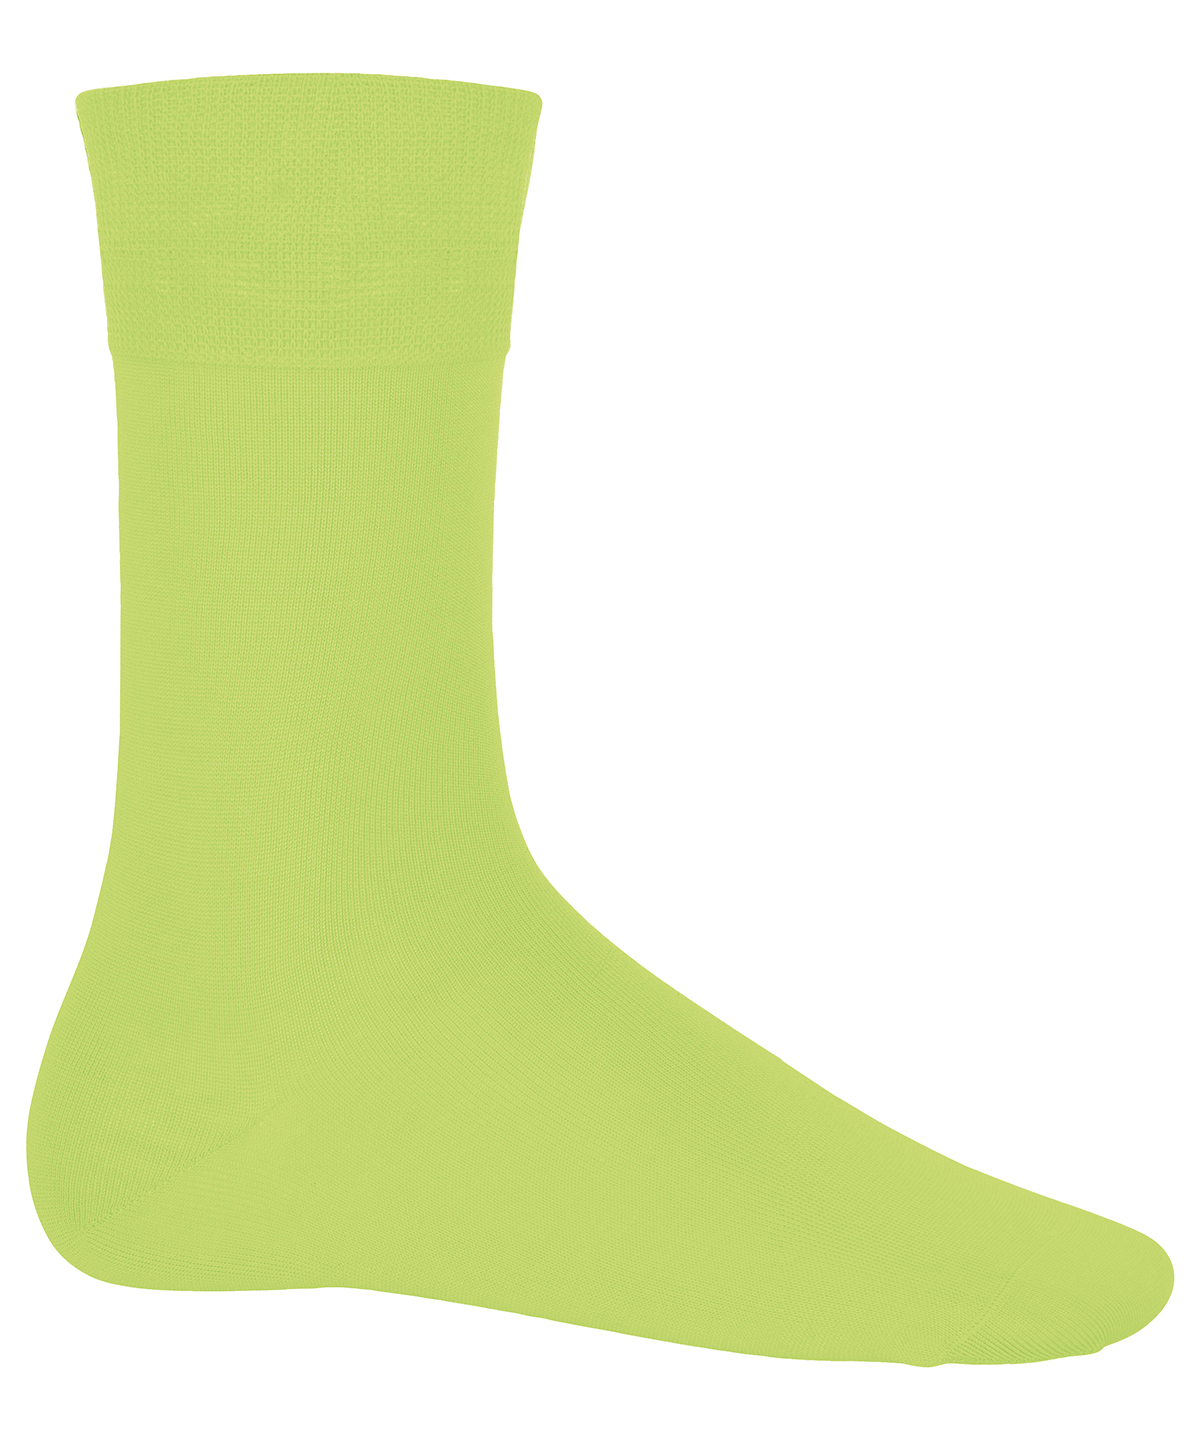 Cotton City Socks Lime Size 1012